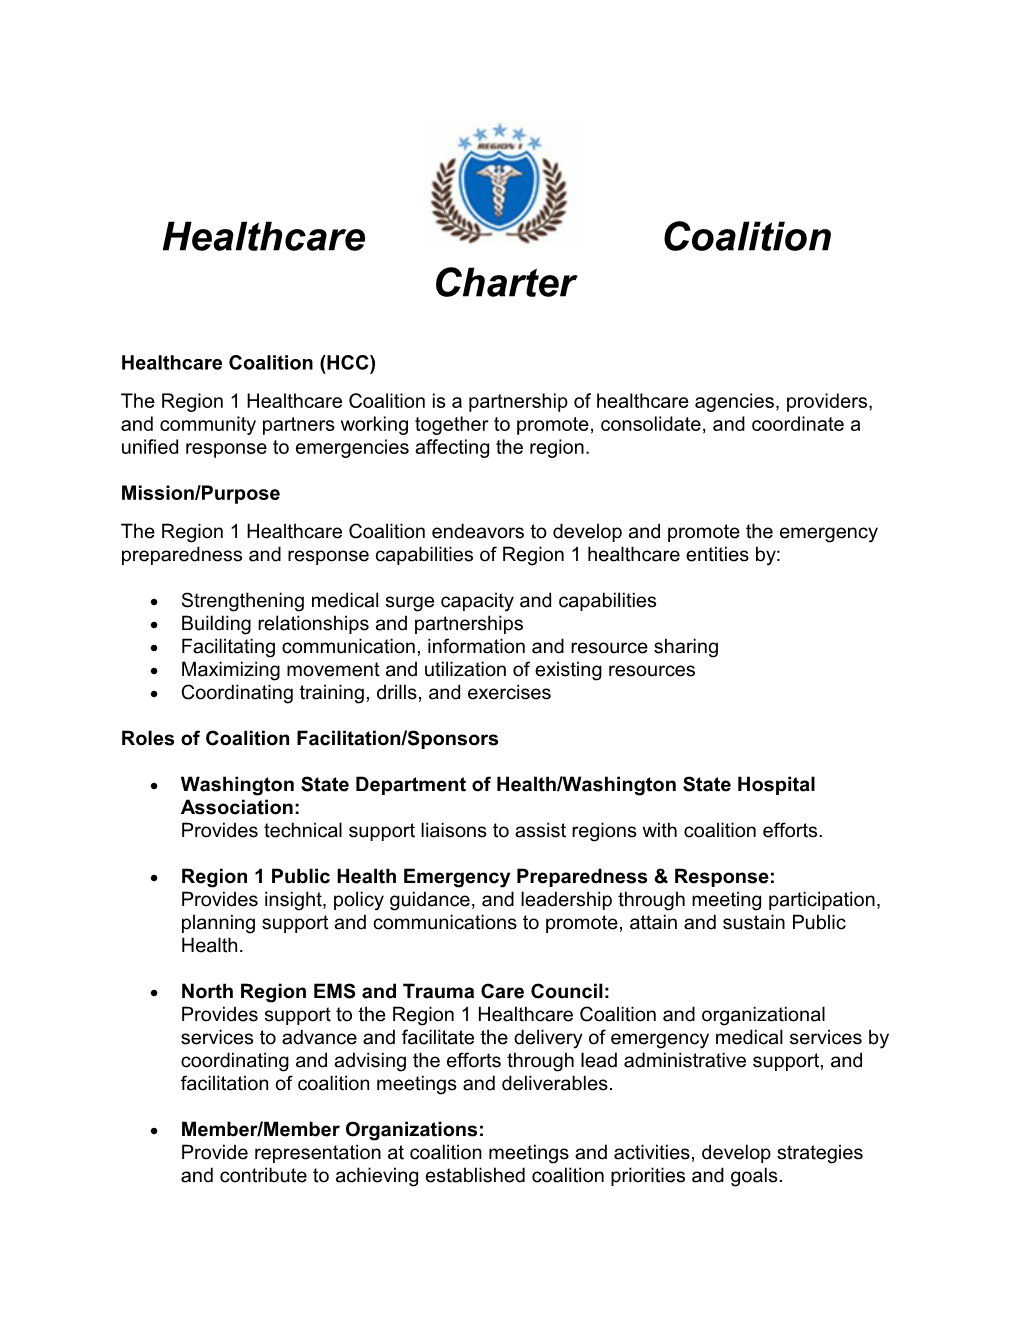 Healthcare Coalition Charter